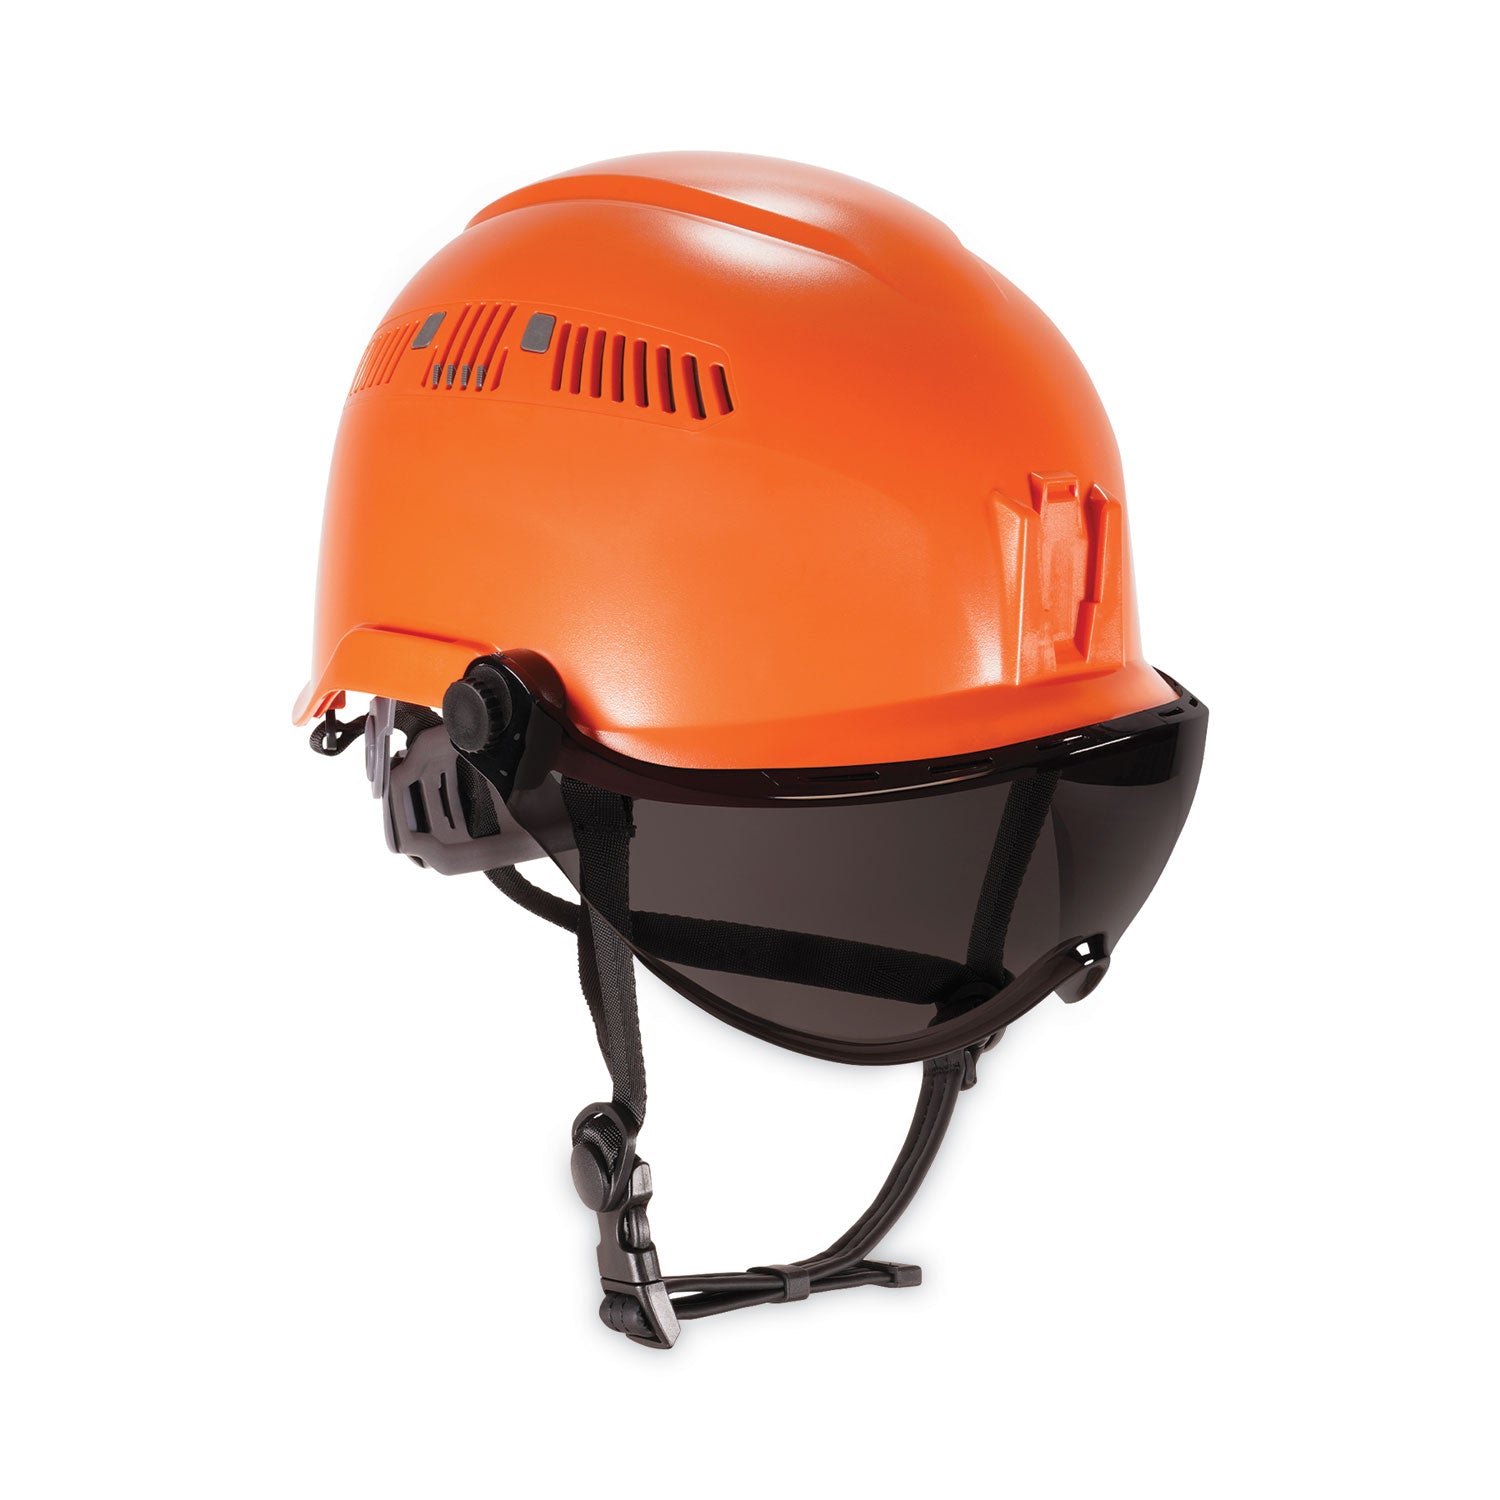 skullerz-8975v-class-c-safety-helmet-w-8991-visor-kit-smoke-lens-6-pt-ratchet-suspension-orangeships-in-1-3-business-days_ego60222 - 1